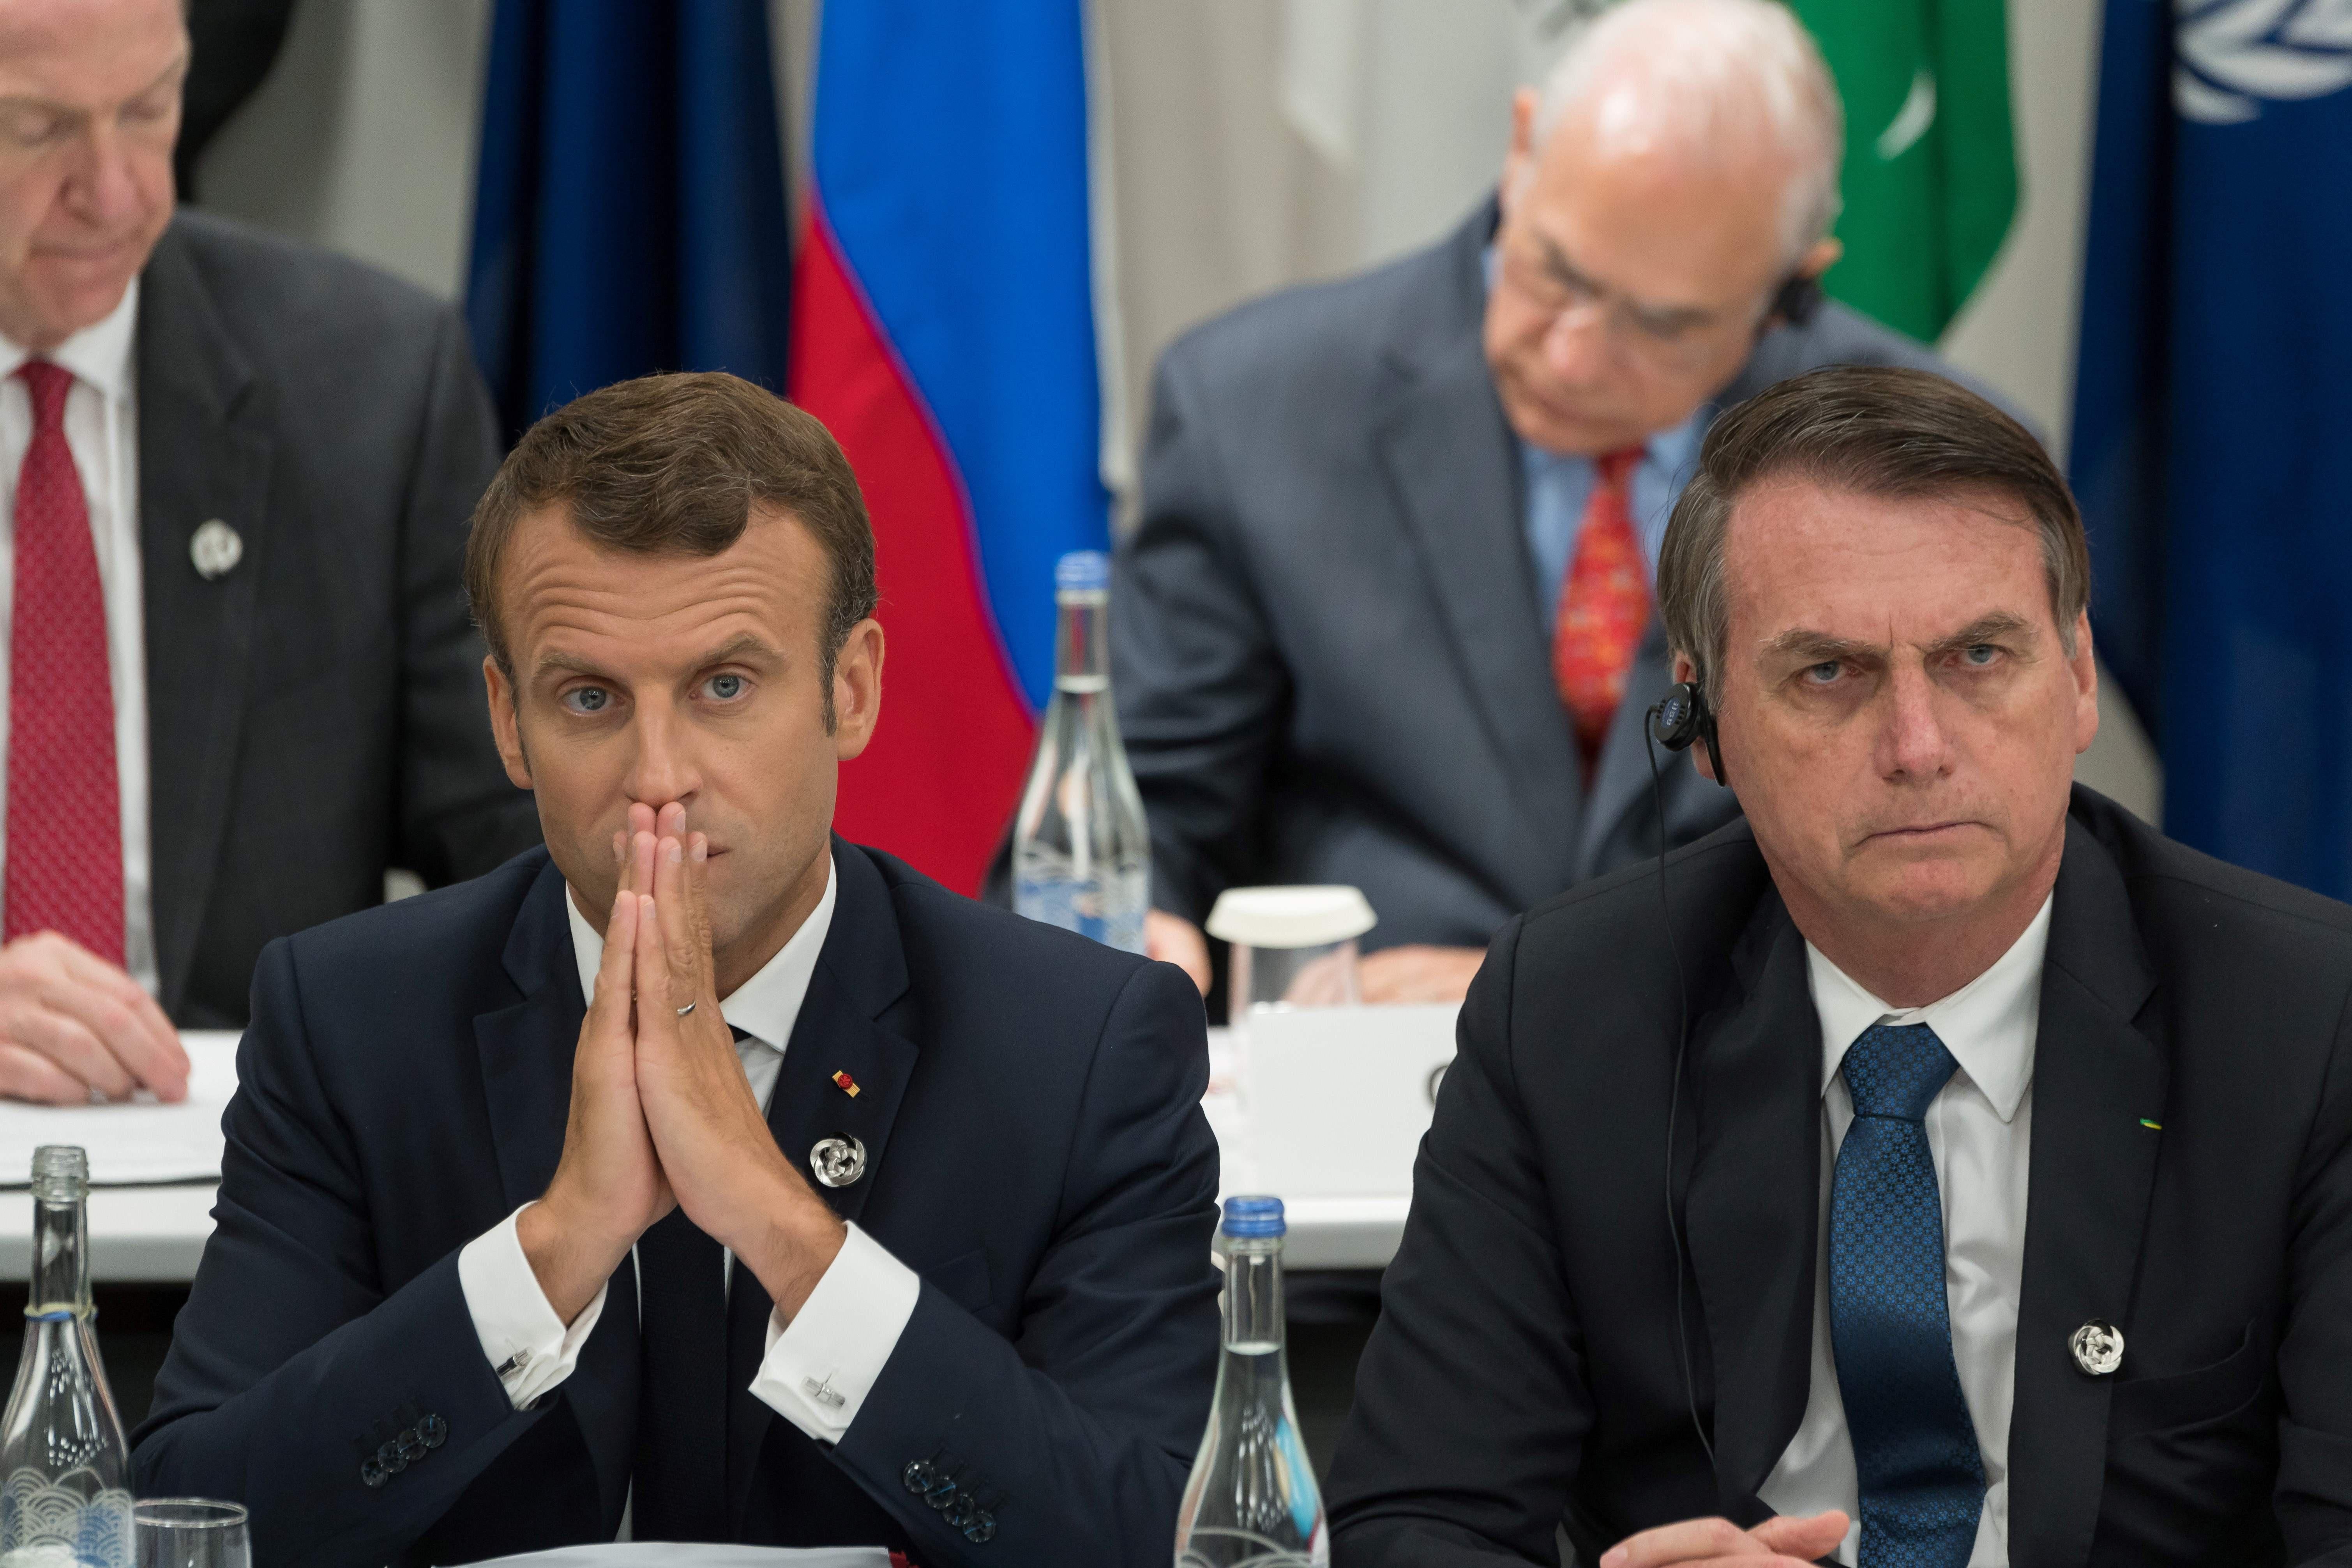 Emmanuel Macron and Jair Bolsonaro sitting next to each other.